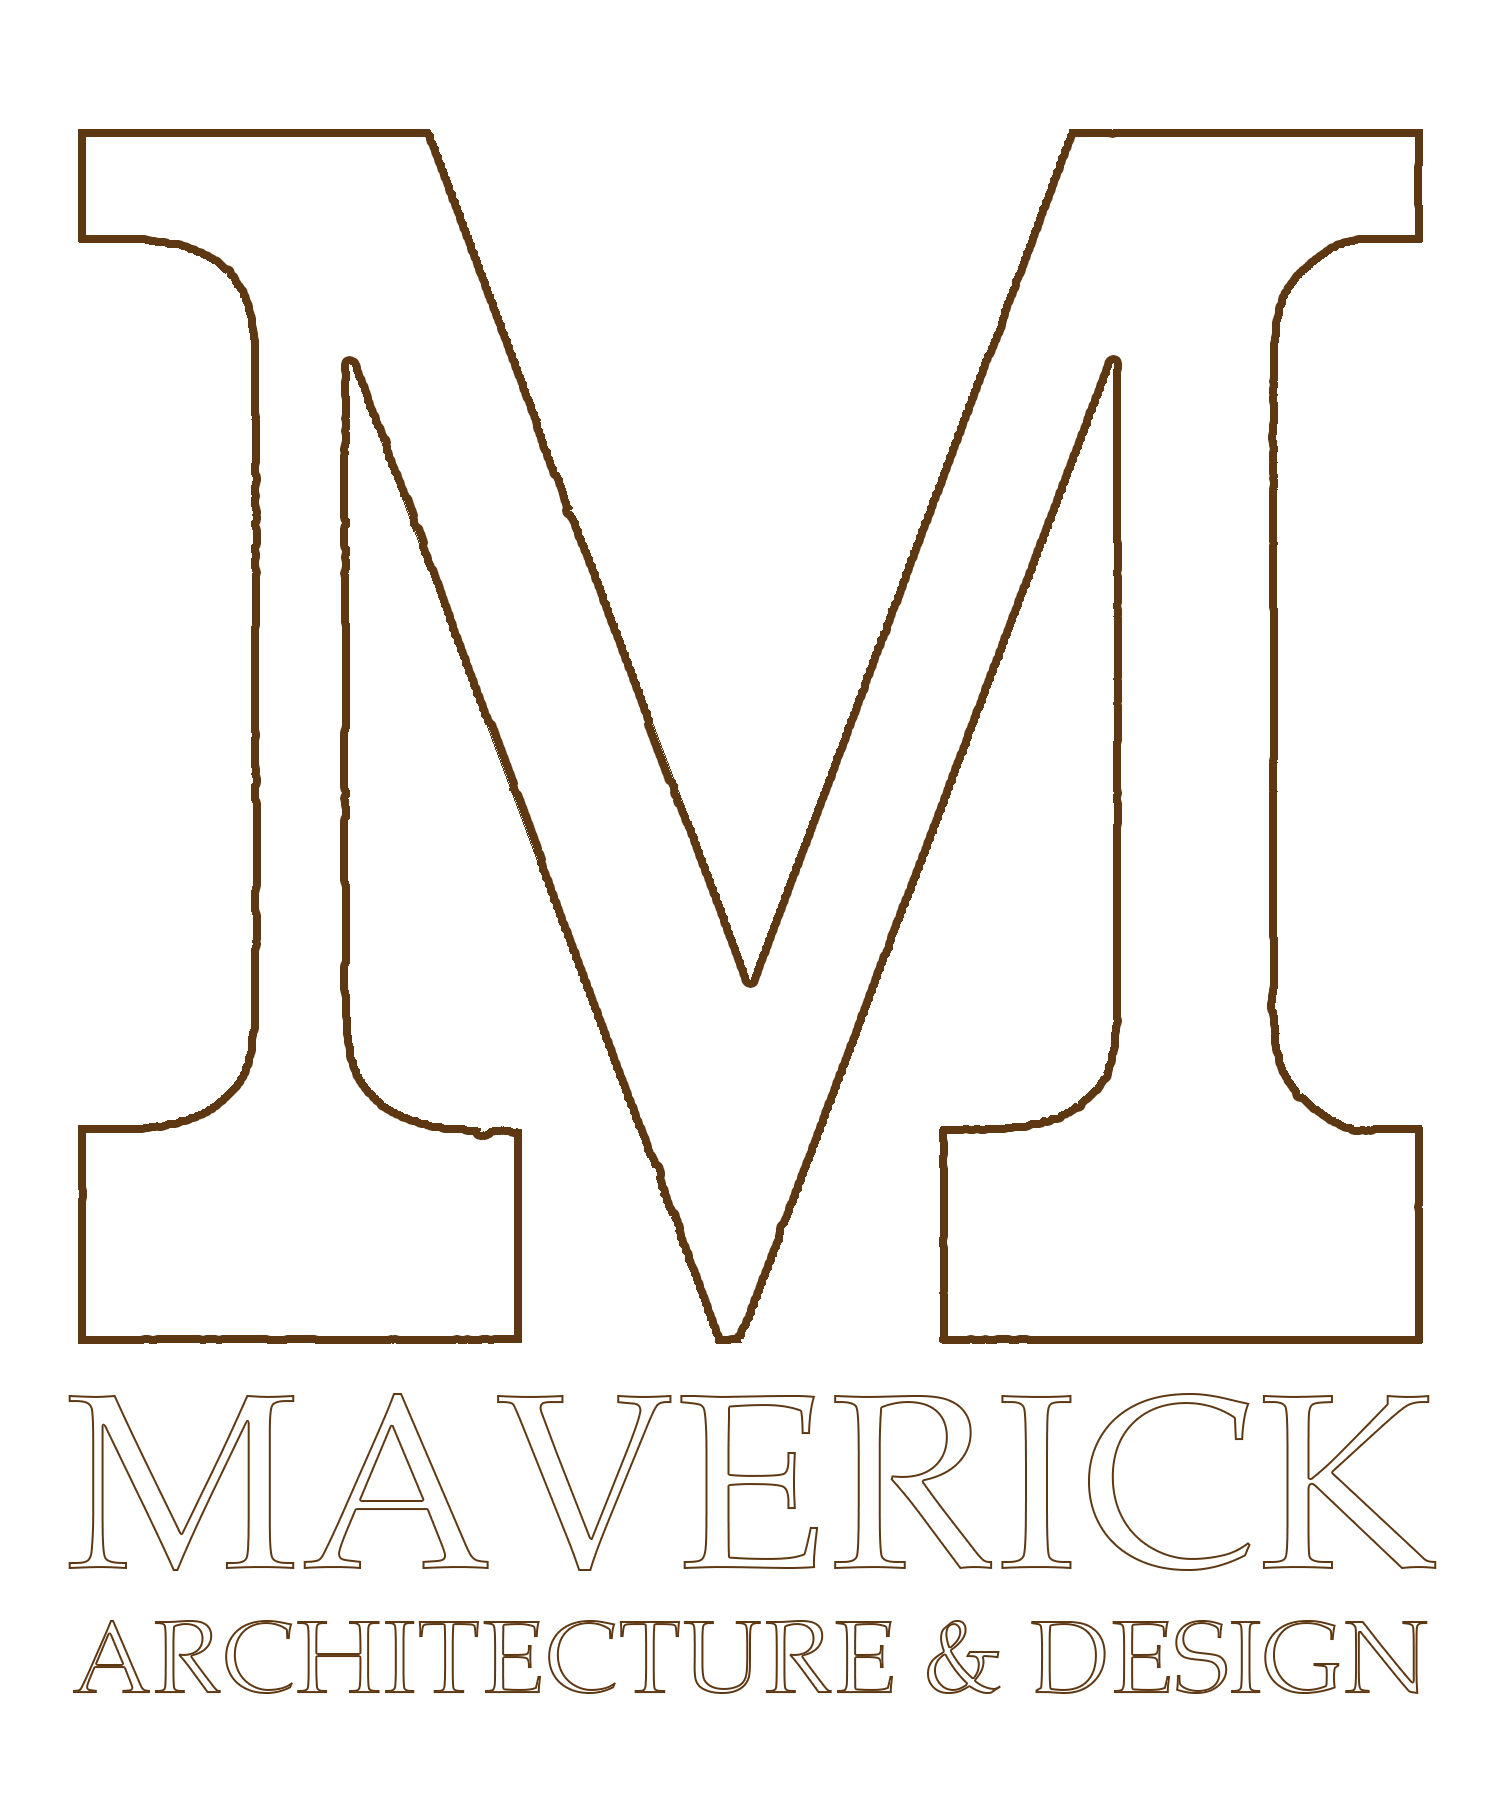 Maverick Architecture  Design